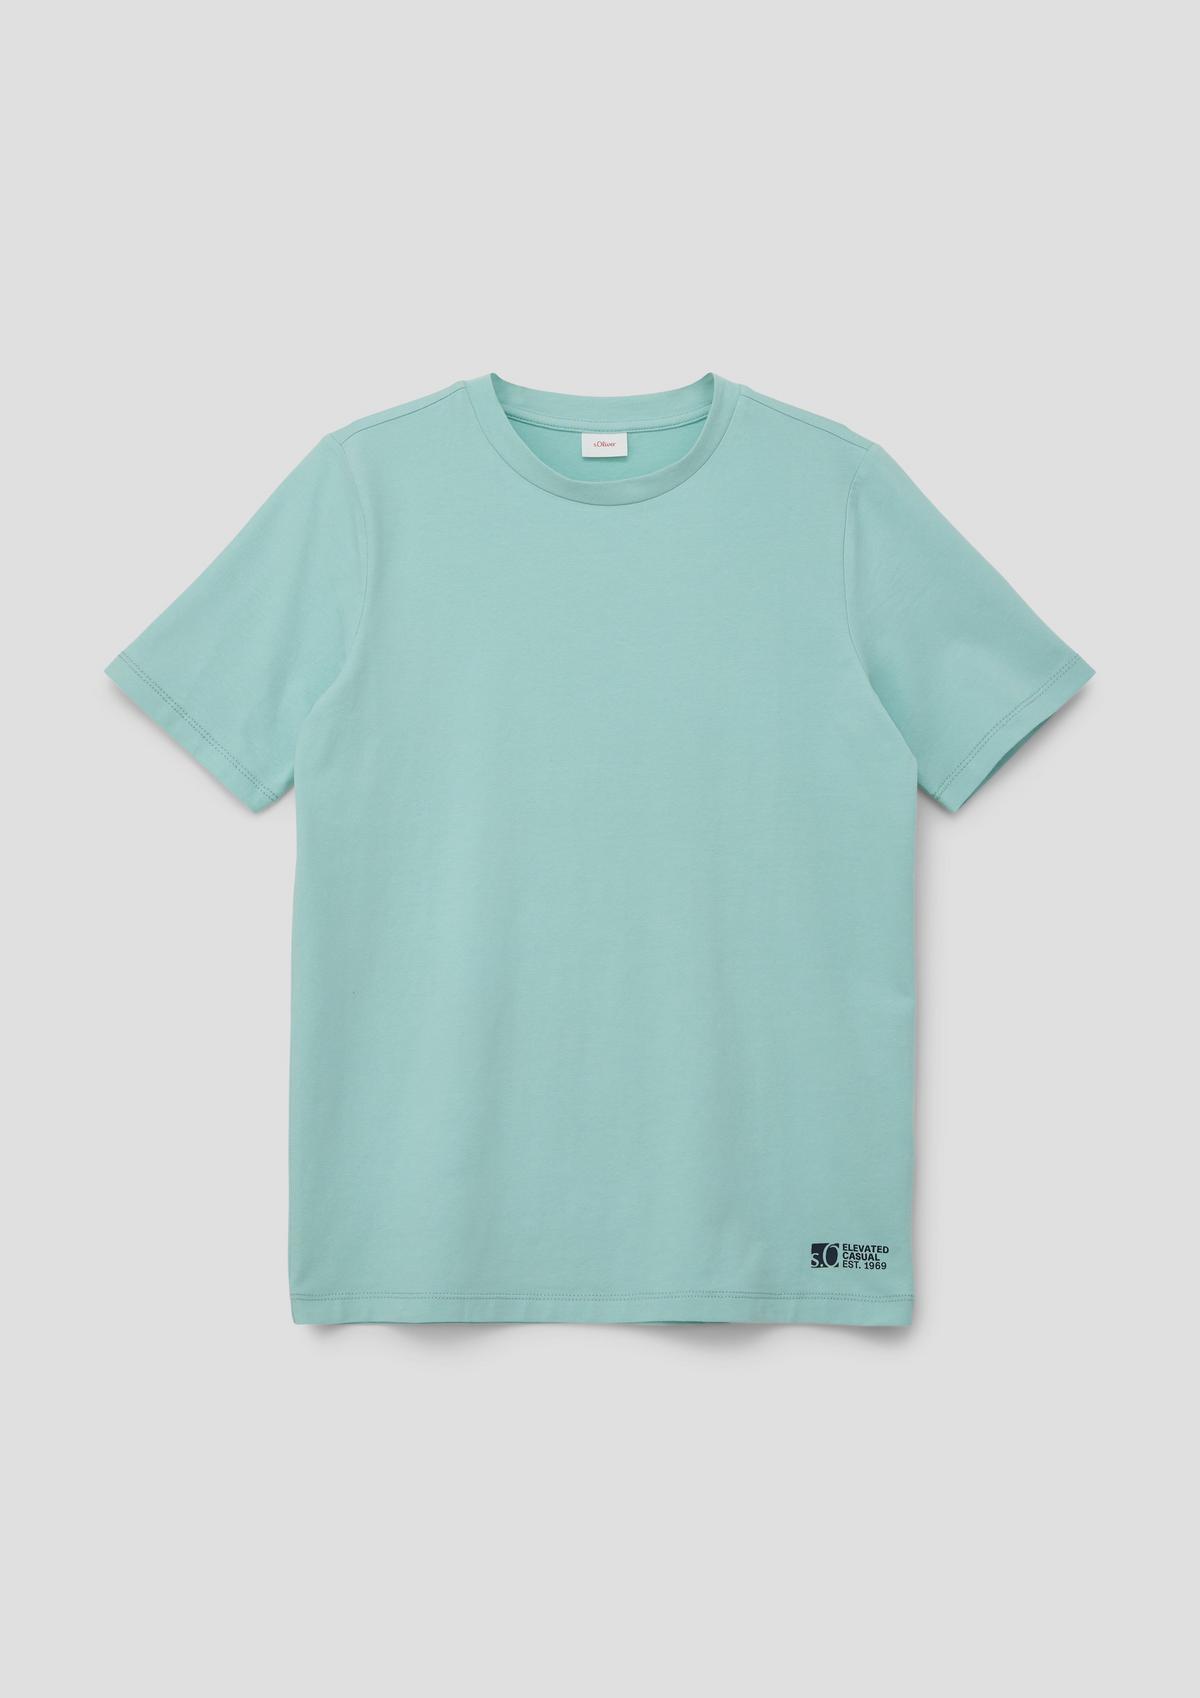 s.Oliver T-shirt with a round neckline